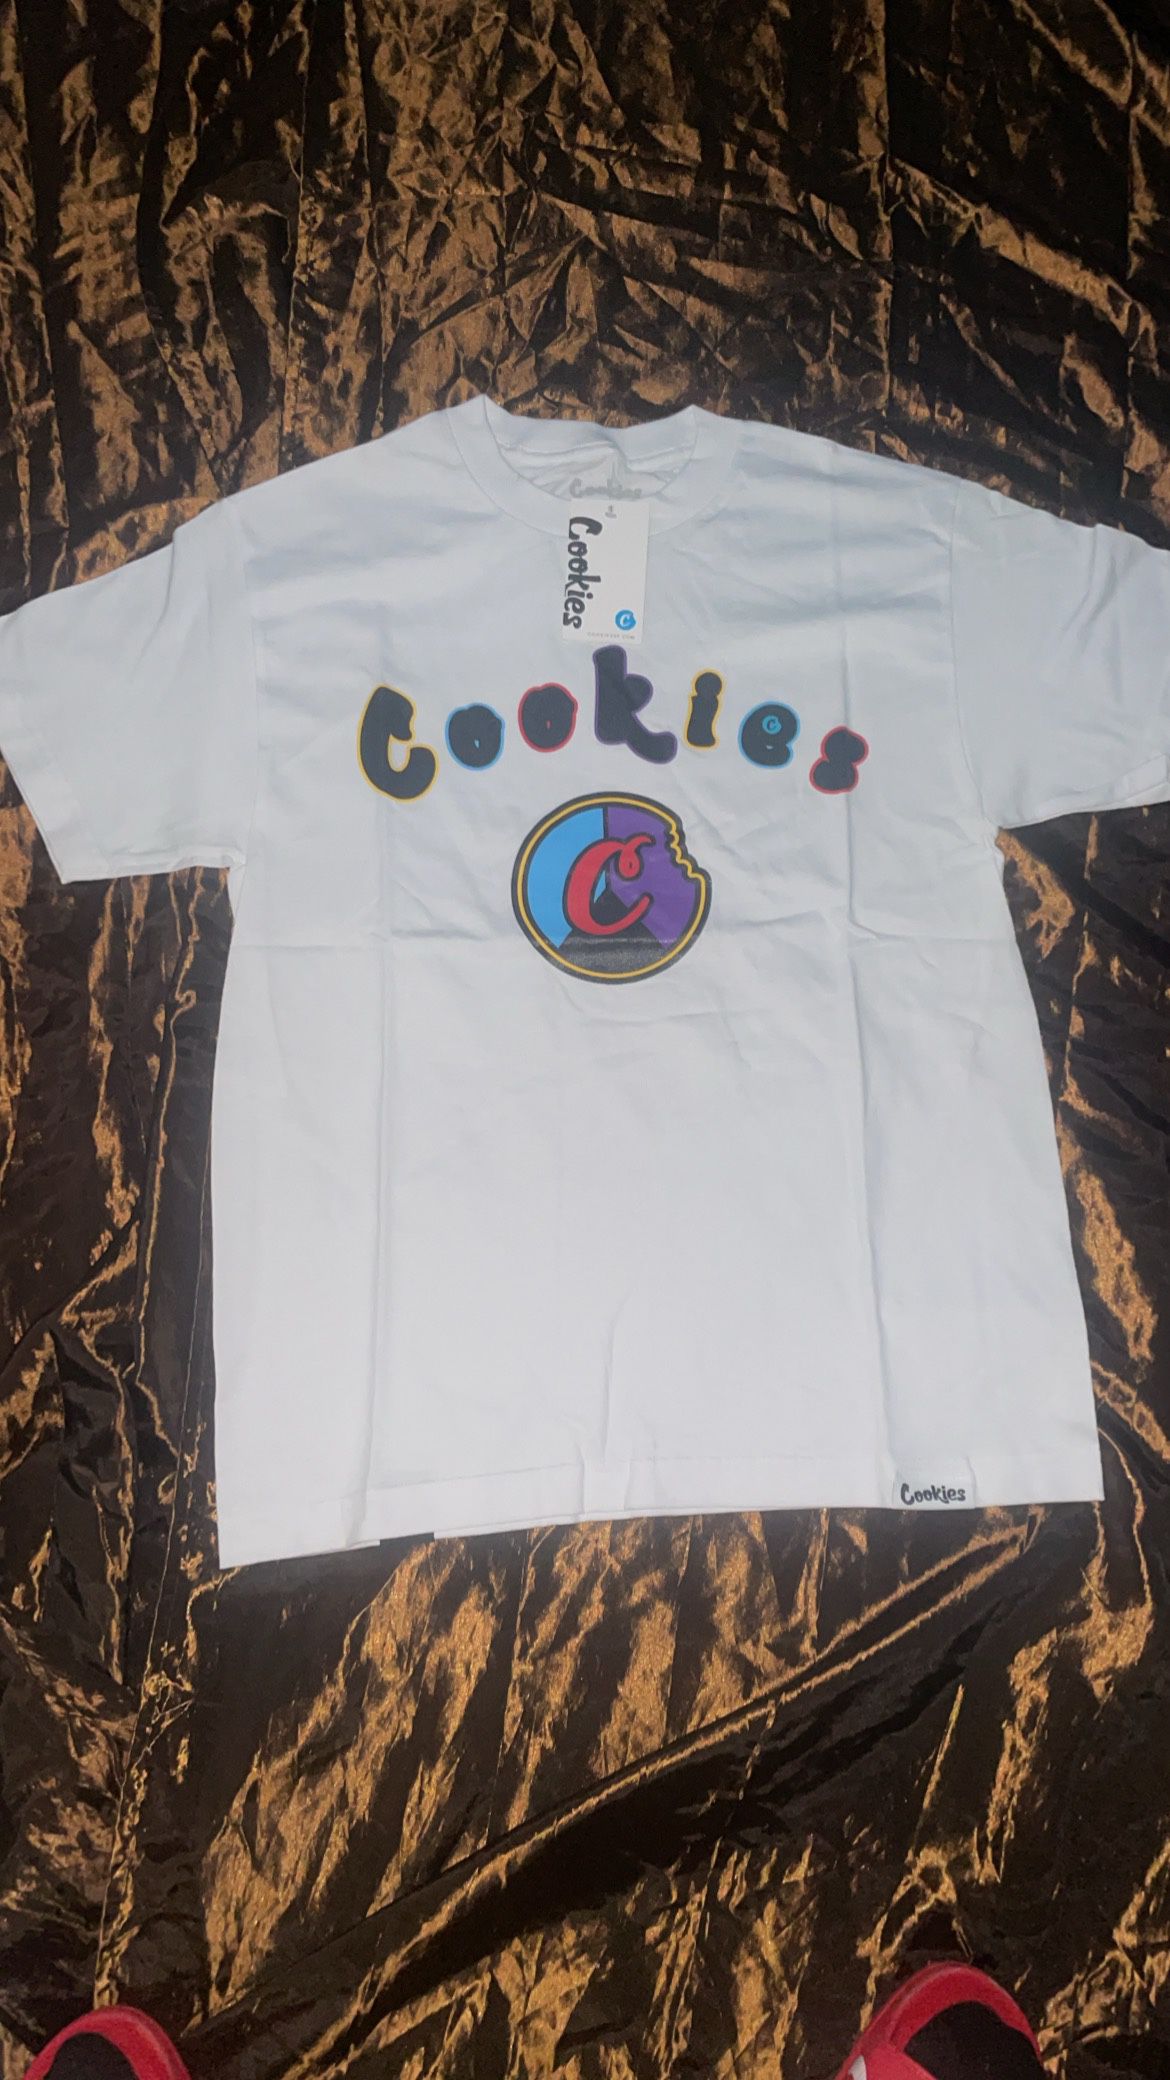 Cookies “Original Logo”